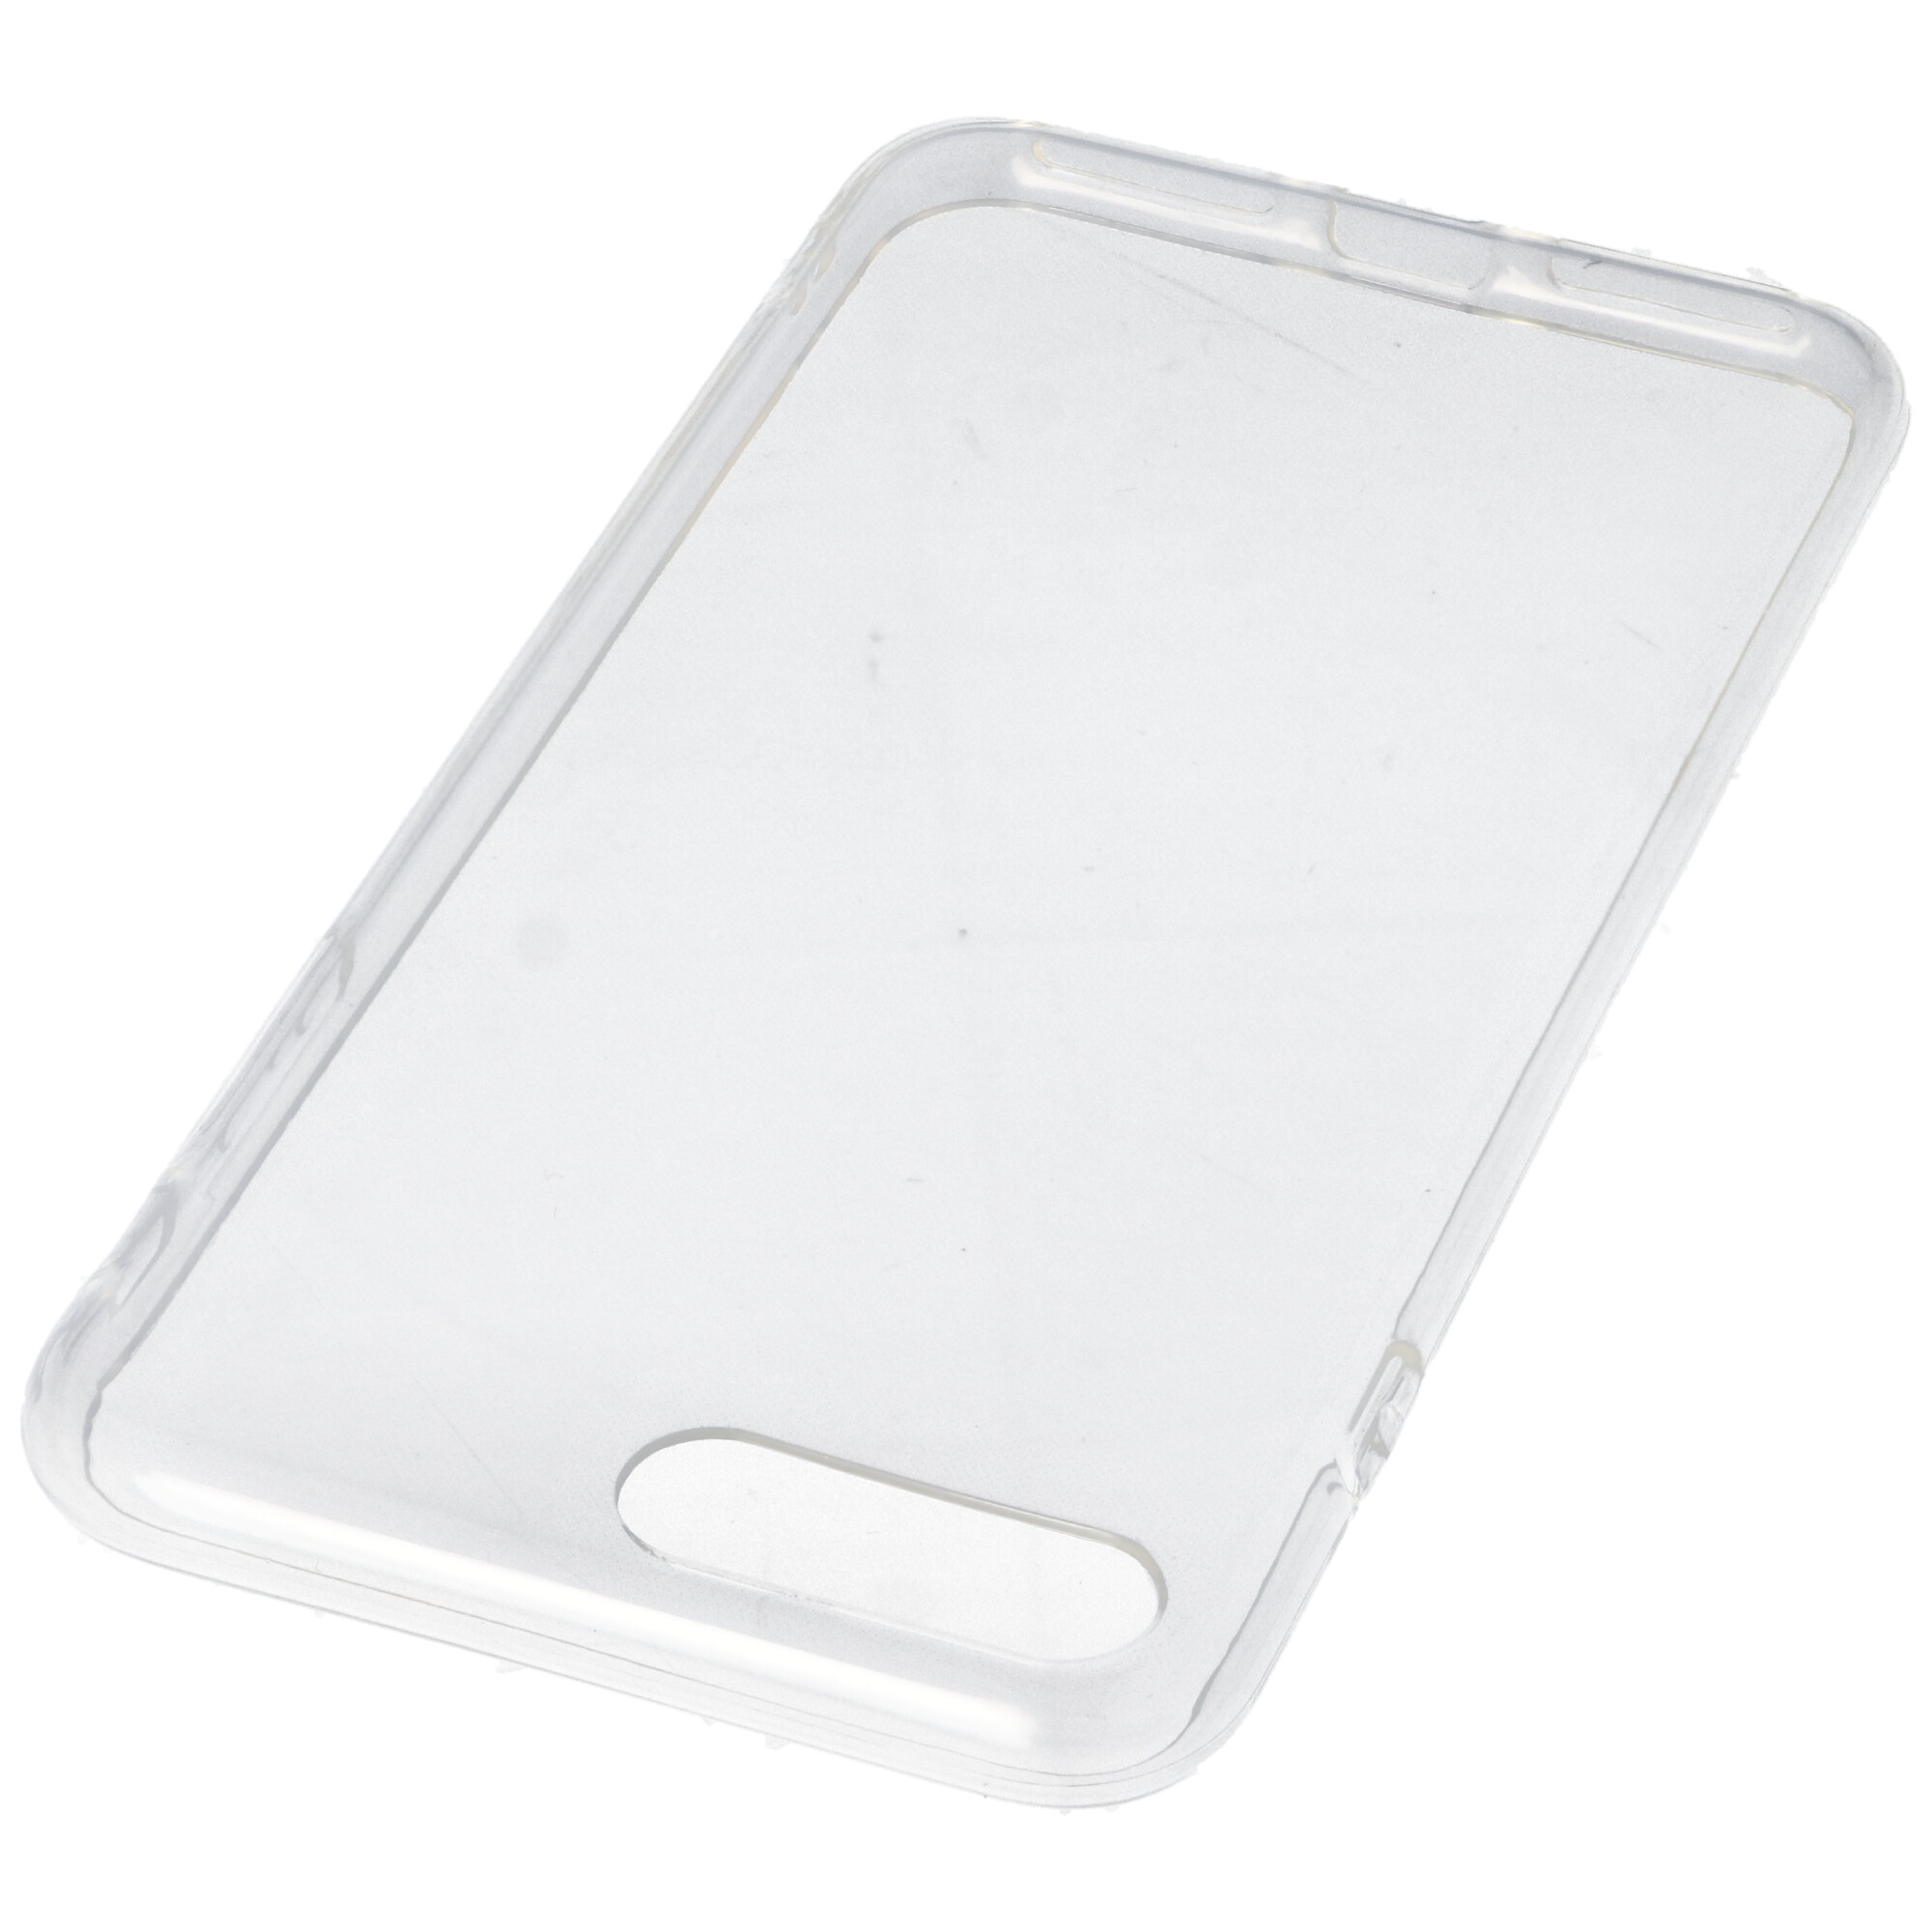 Hülle passend für Apple iPhone 7 Plus / iPhone 8 Plus - transparente Schutzhülle, Anti-Gelb Luftkissen Fallschutz Silikon Handyhülle robustes TPU Case